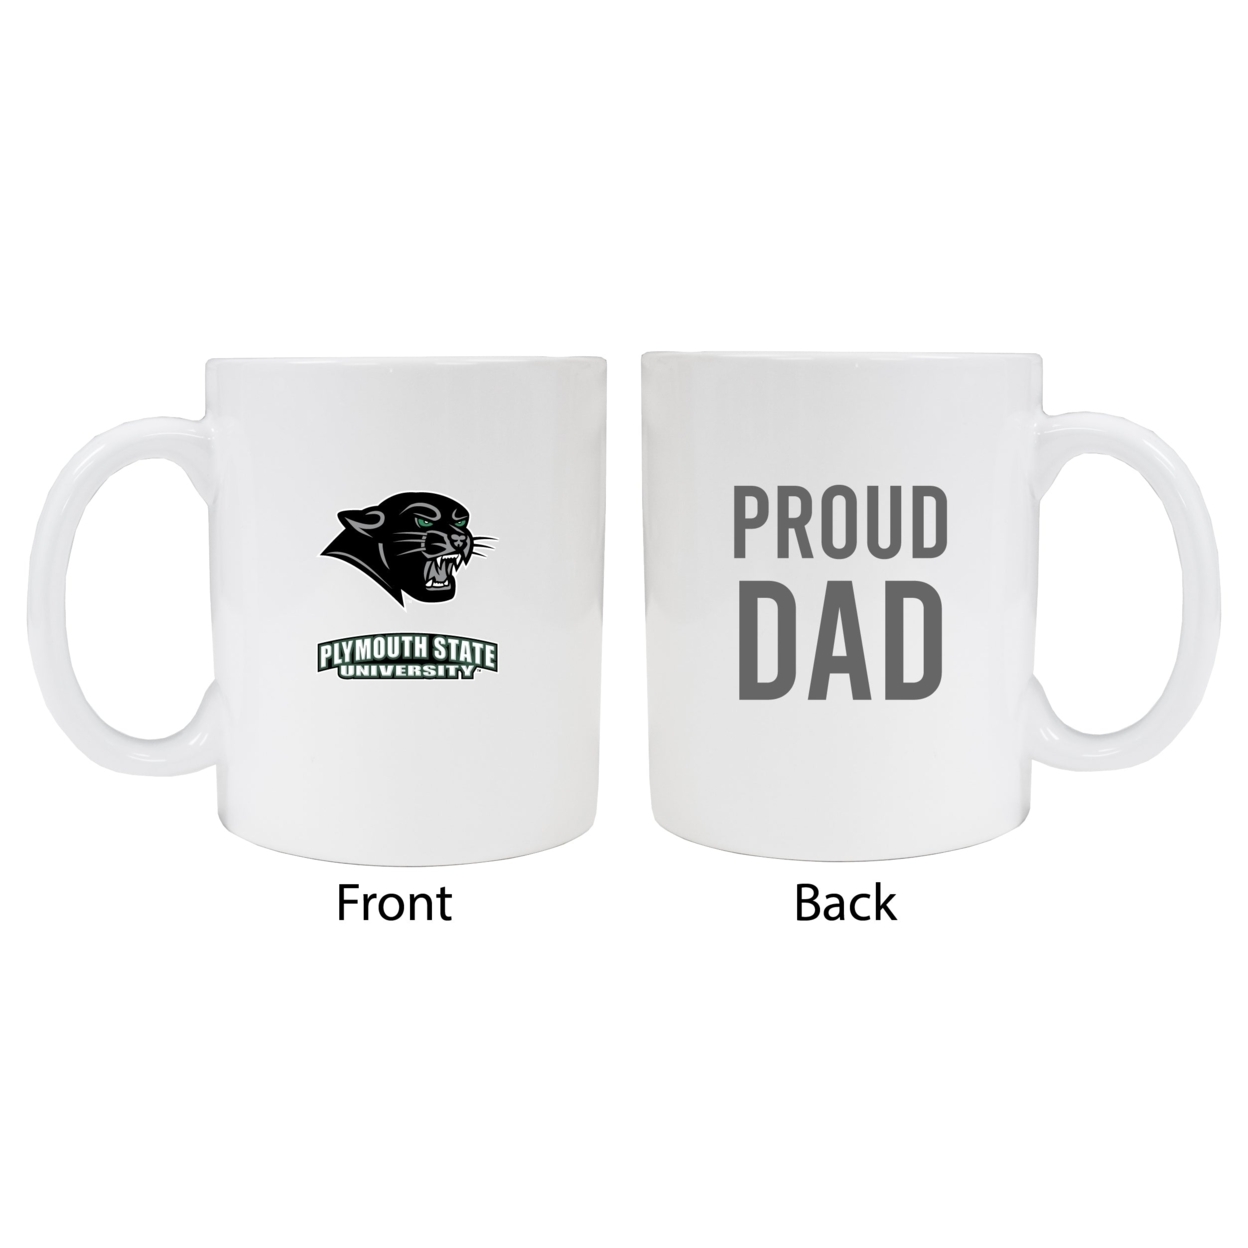 Plymouth State University Proud Dad Ceramic Coffee Mug - White